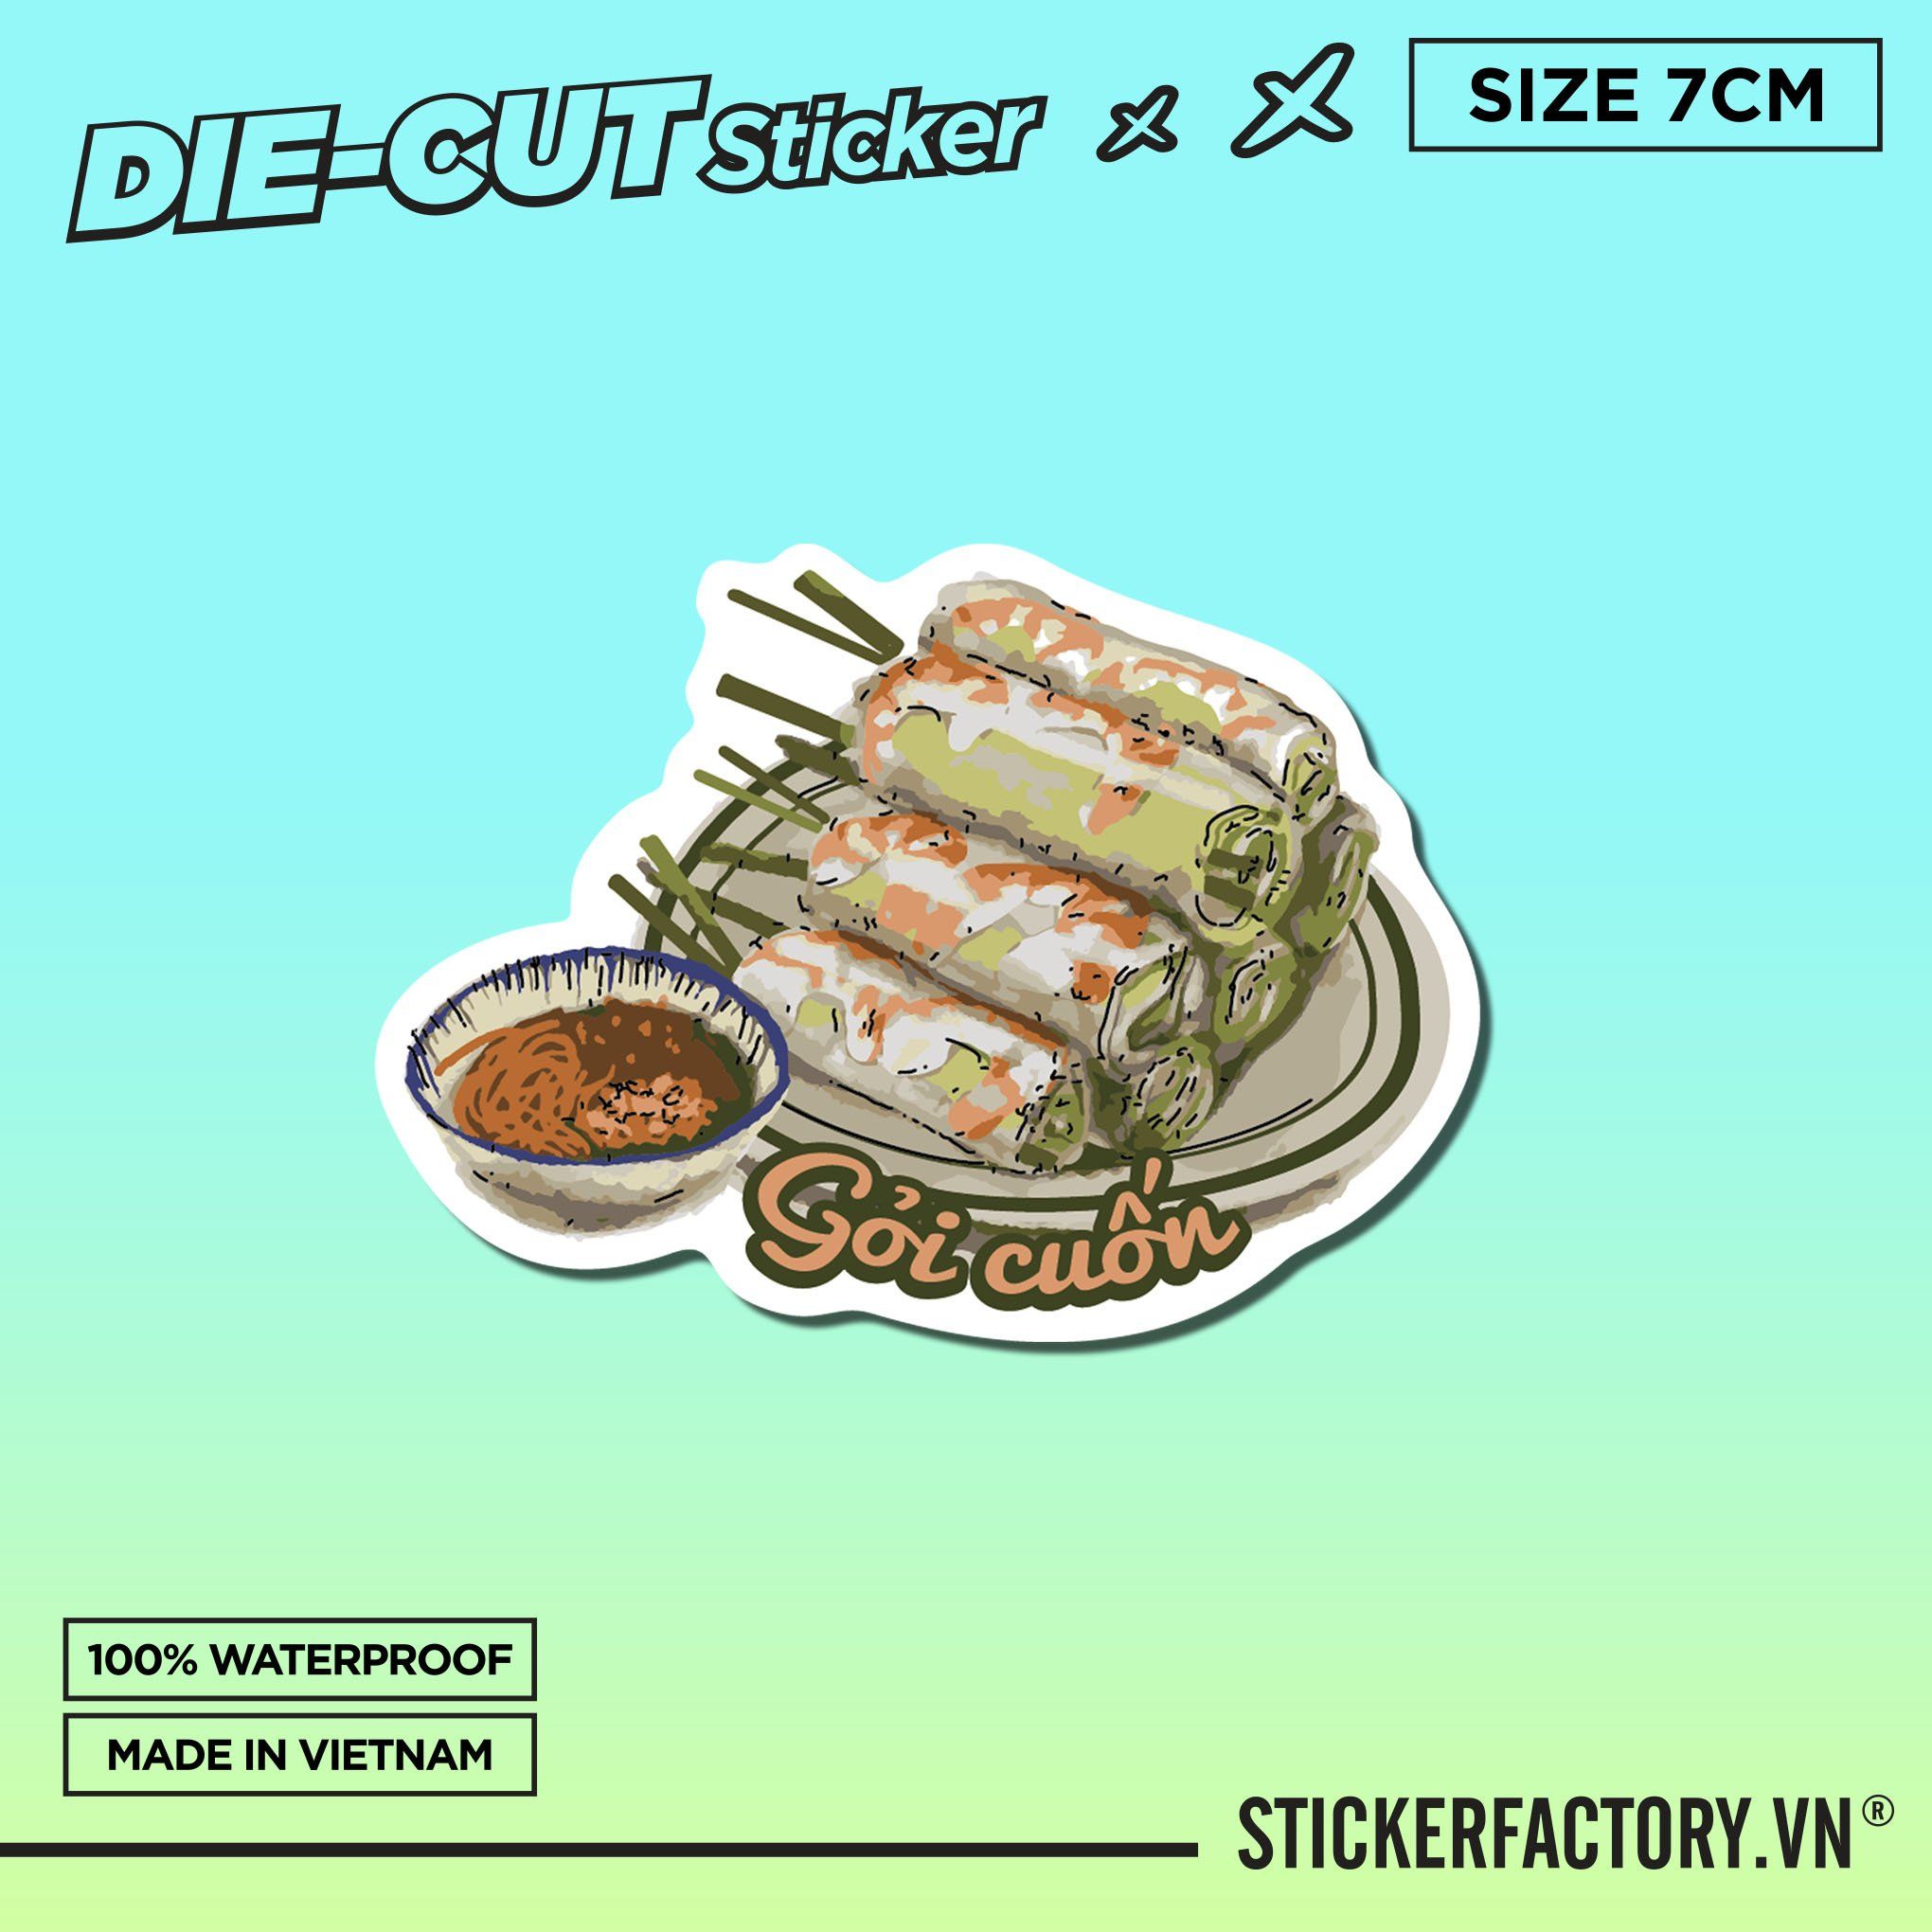 GỎI CUỐN - Sticker Die-cut hình dán cắt rời